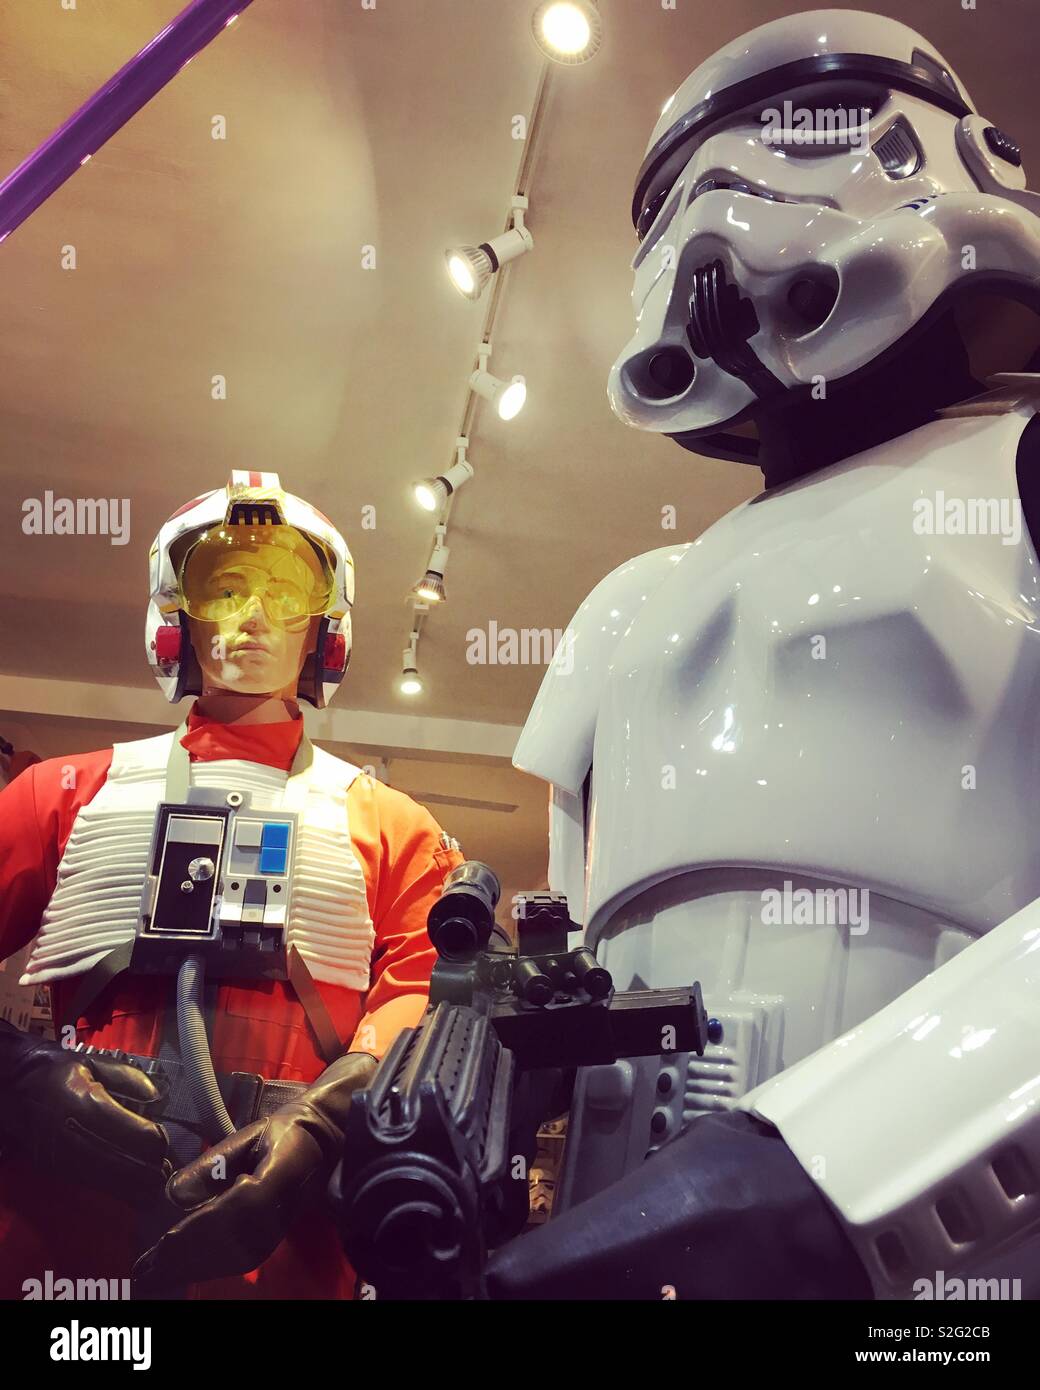 Film Star Wars caratteri con Luke Skywalker, sinistra e Storm Trooper, destra Foto Stock